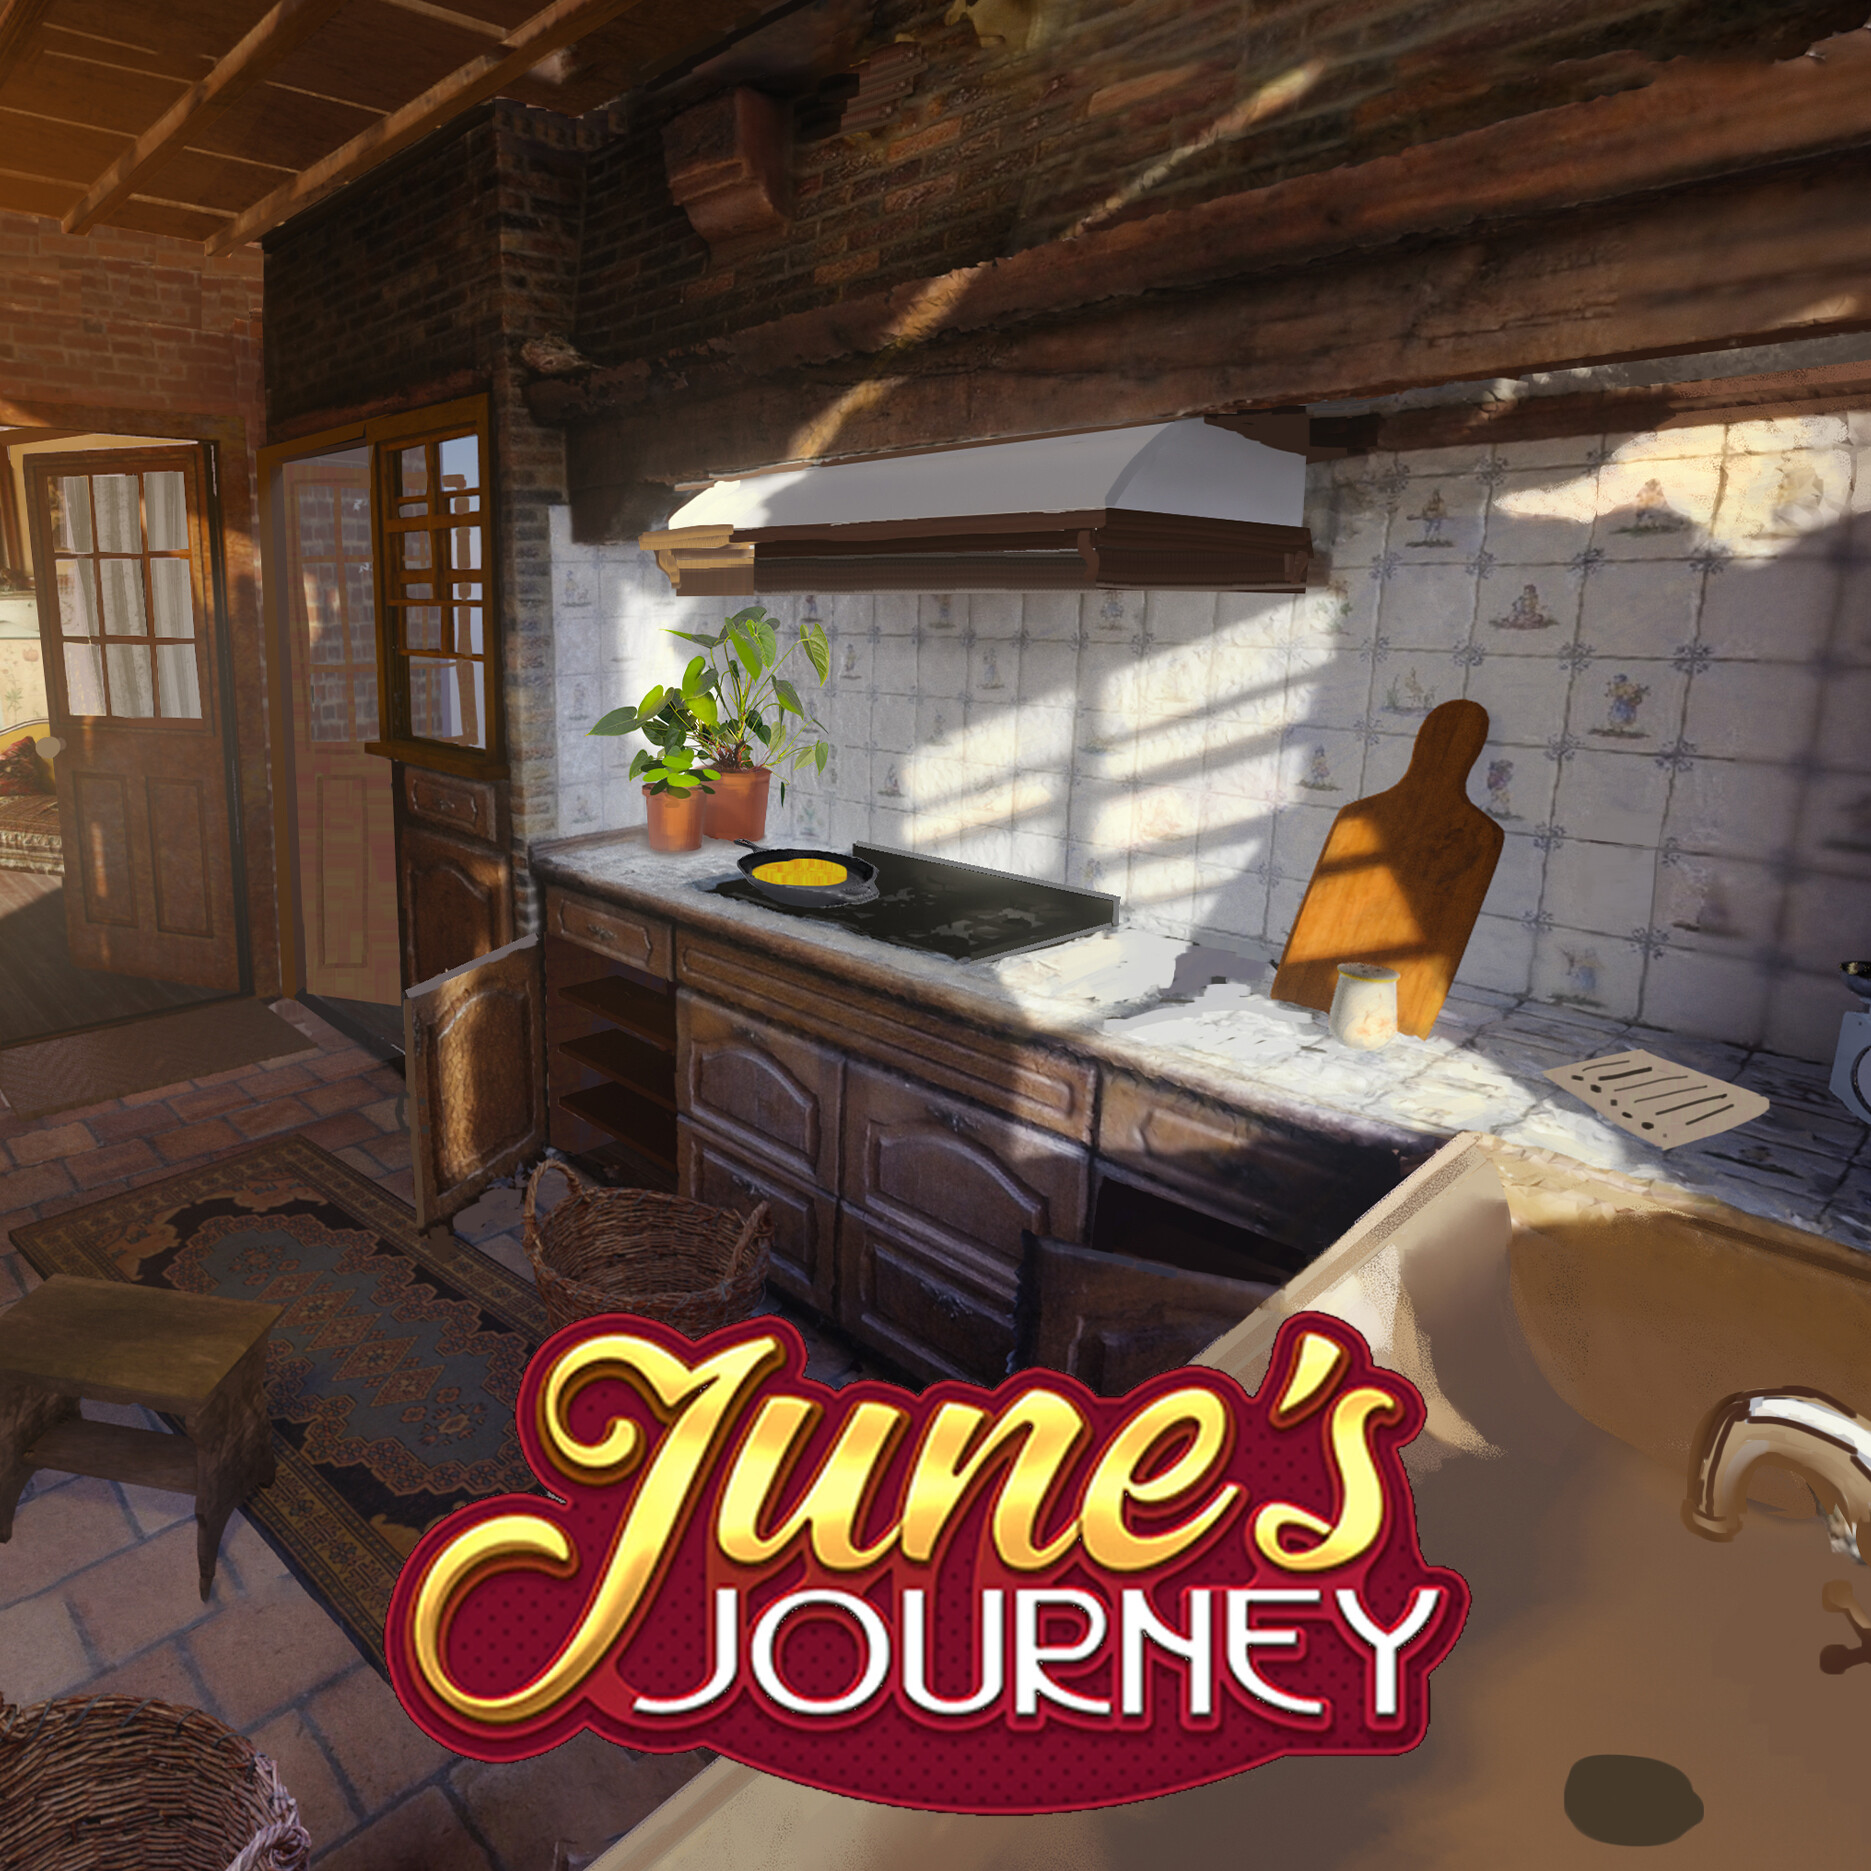 june's journey palace kitchen